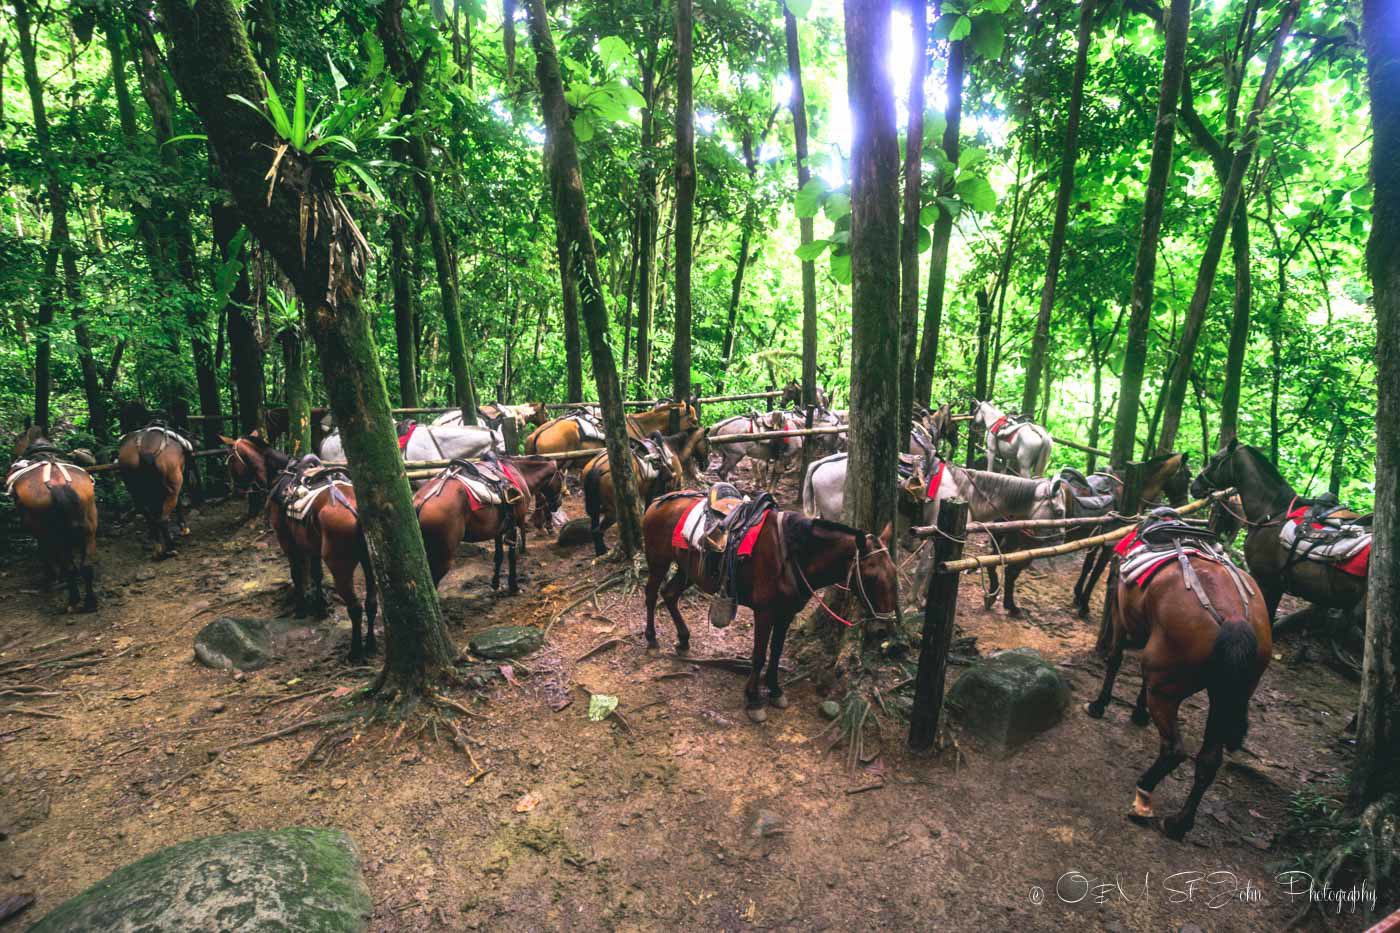 Horseback riding tour at Nauyaca Waterfalls, Costa Rica